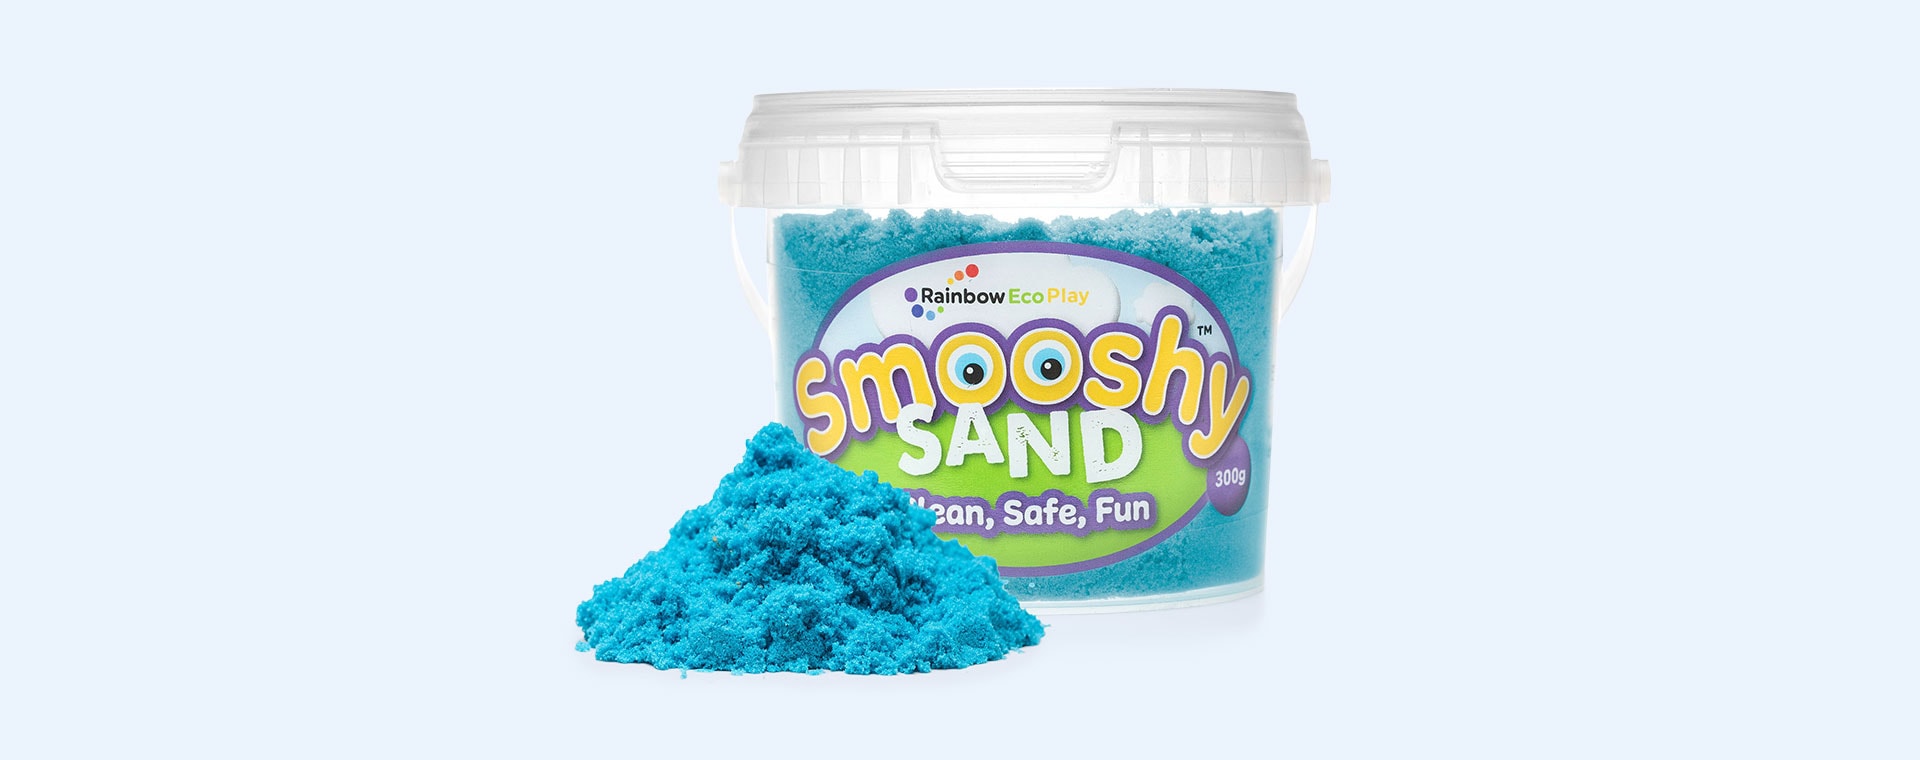 Blue Rainbow Eco Play Smooshy Kinetic Magic Sand 300g